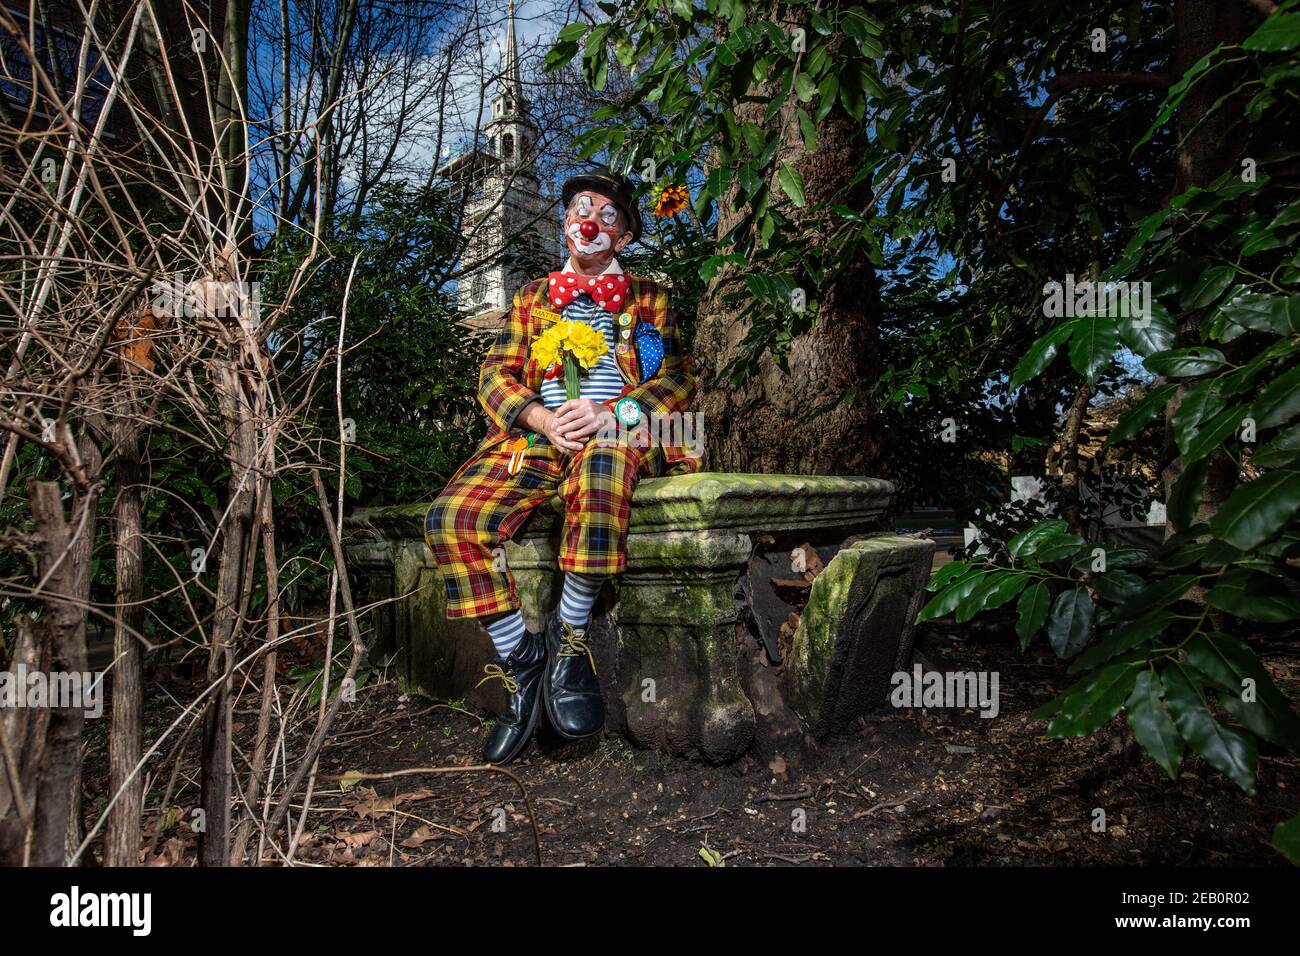 Mattie the Clown of Clowns international preparing to celebrate the 75th anniversary of Grimaldi Clown service on Sunday 7th February 2021, London, UK. Stock Photo